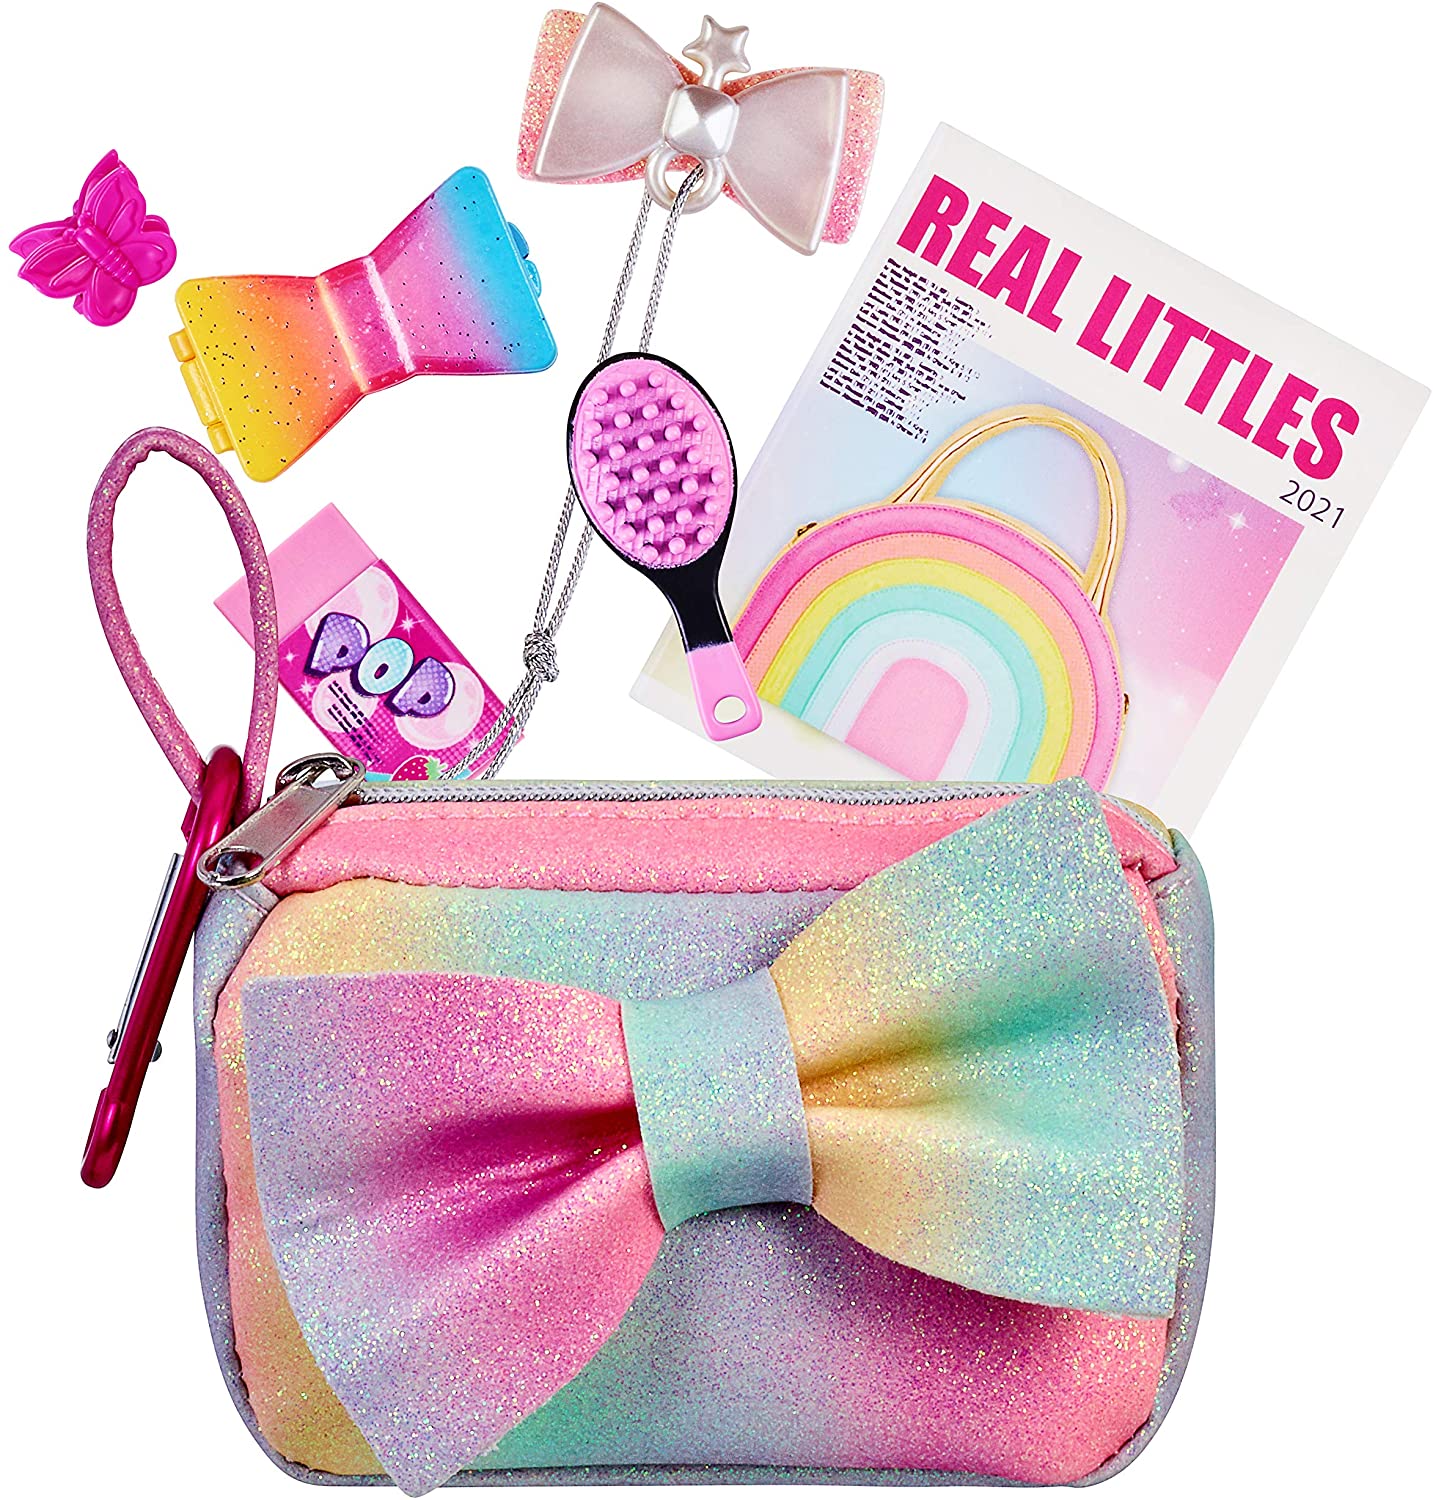 real littles handbags series 3